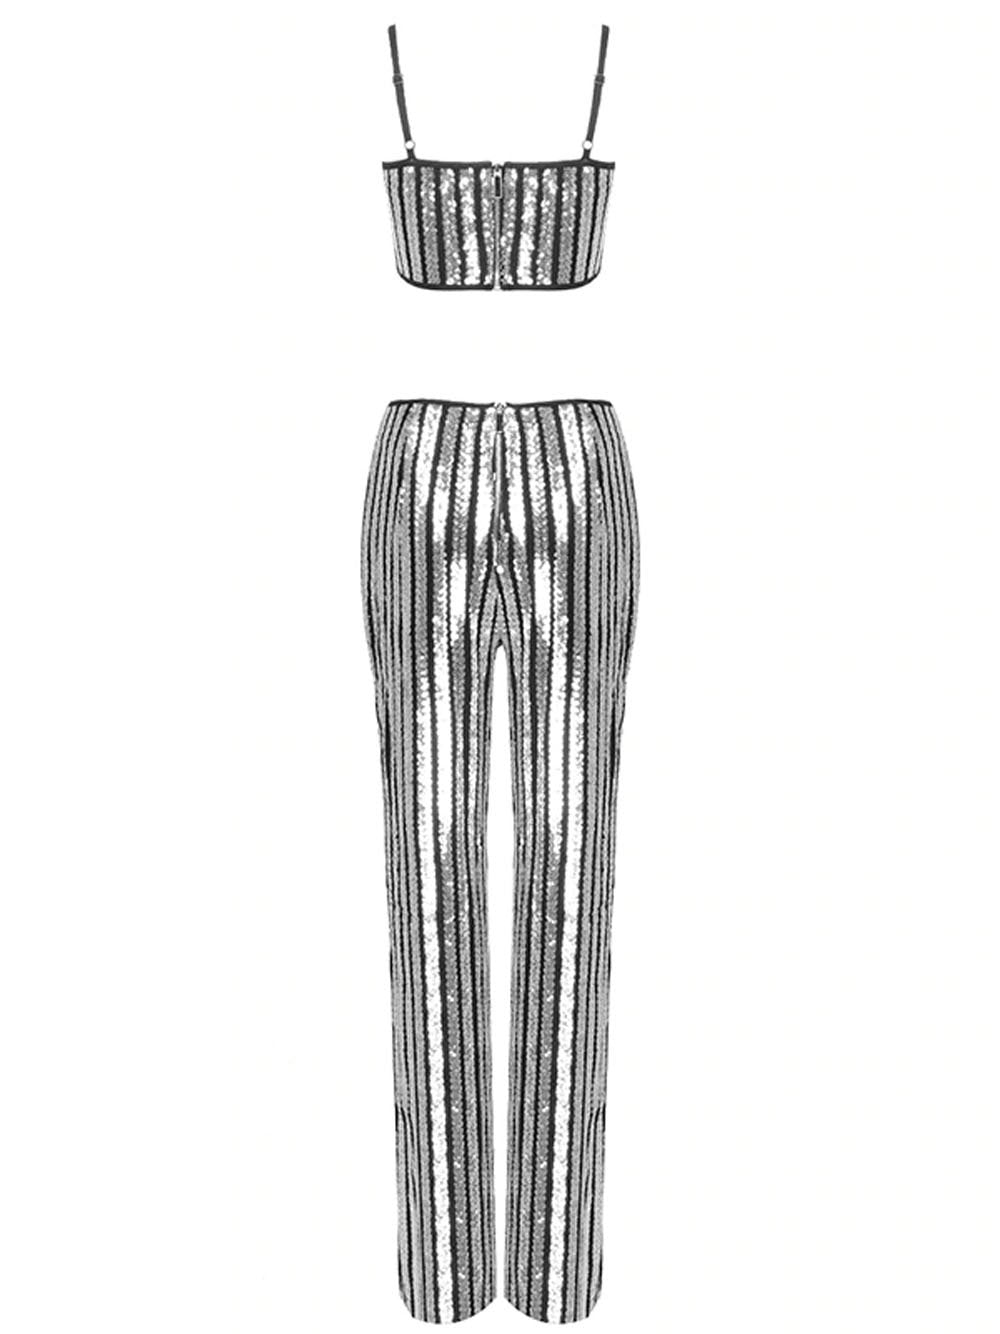 Striped Sequins Top & Pants Set